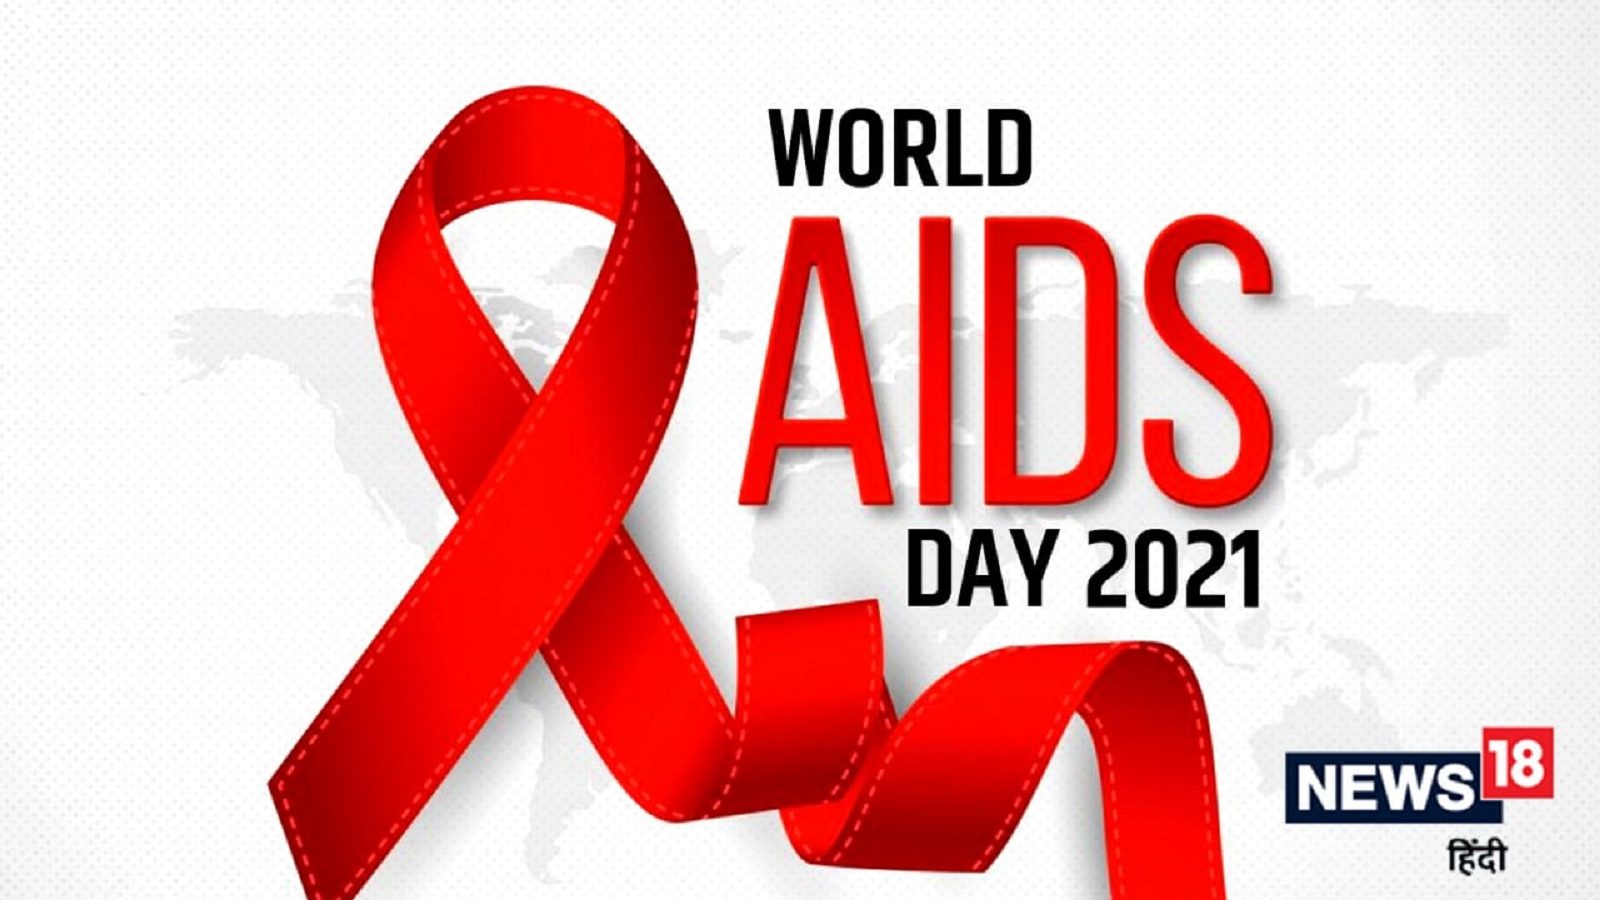 2021 day world aids